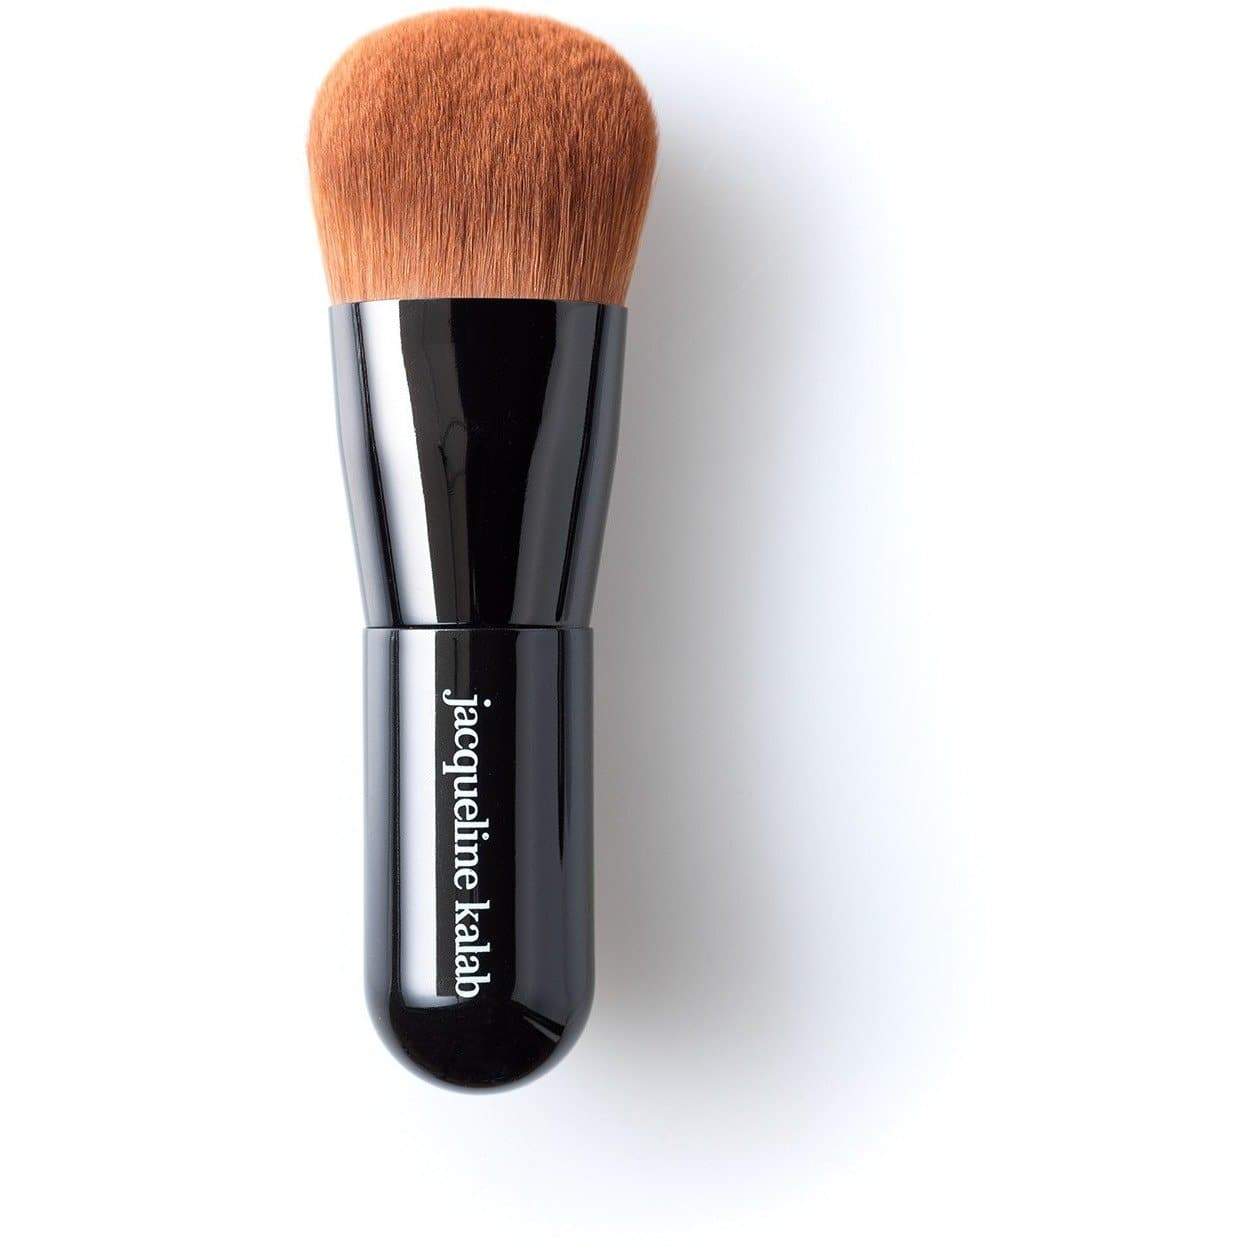 chanel foundation makeup brush